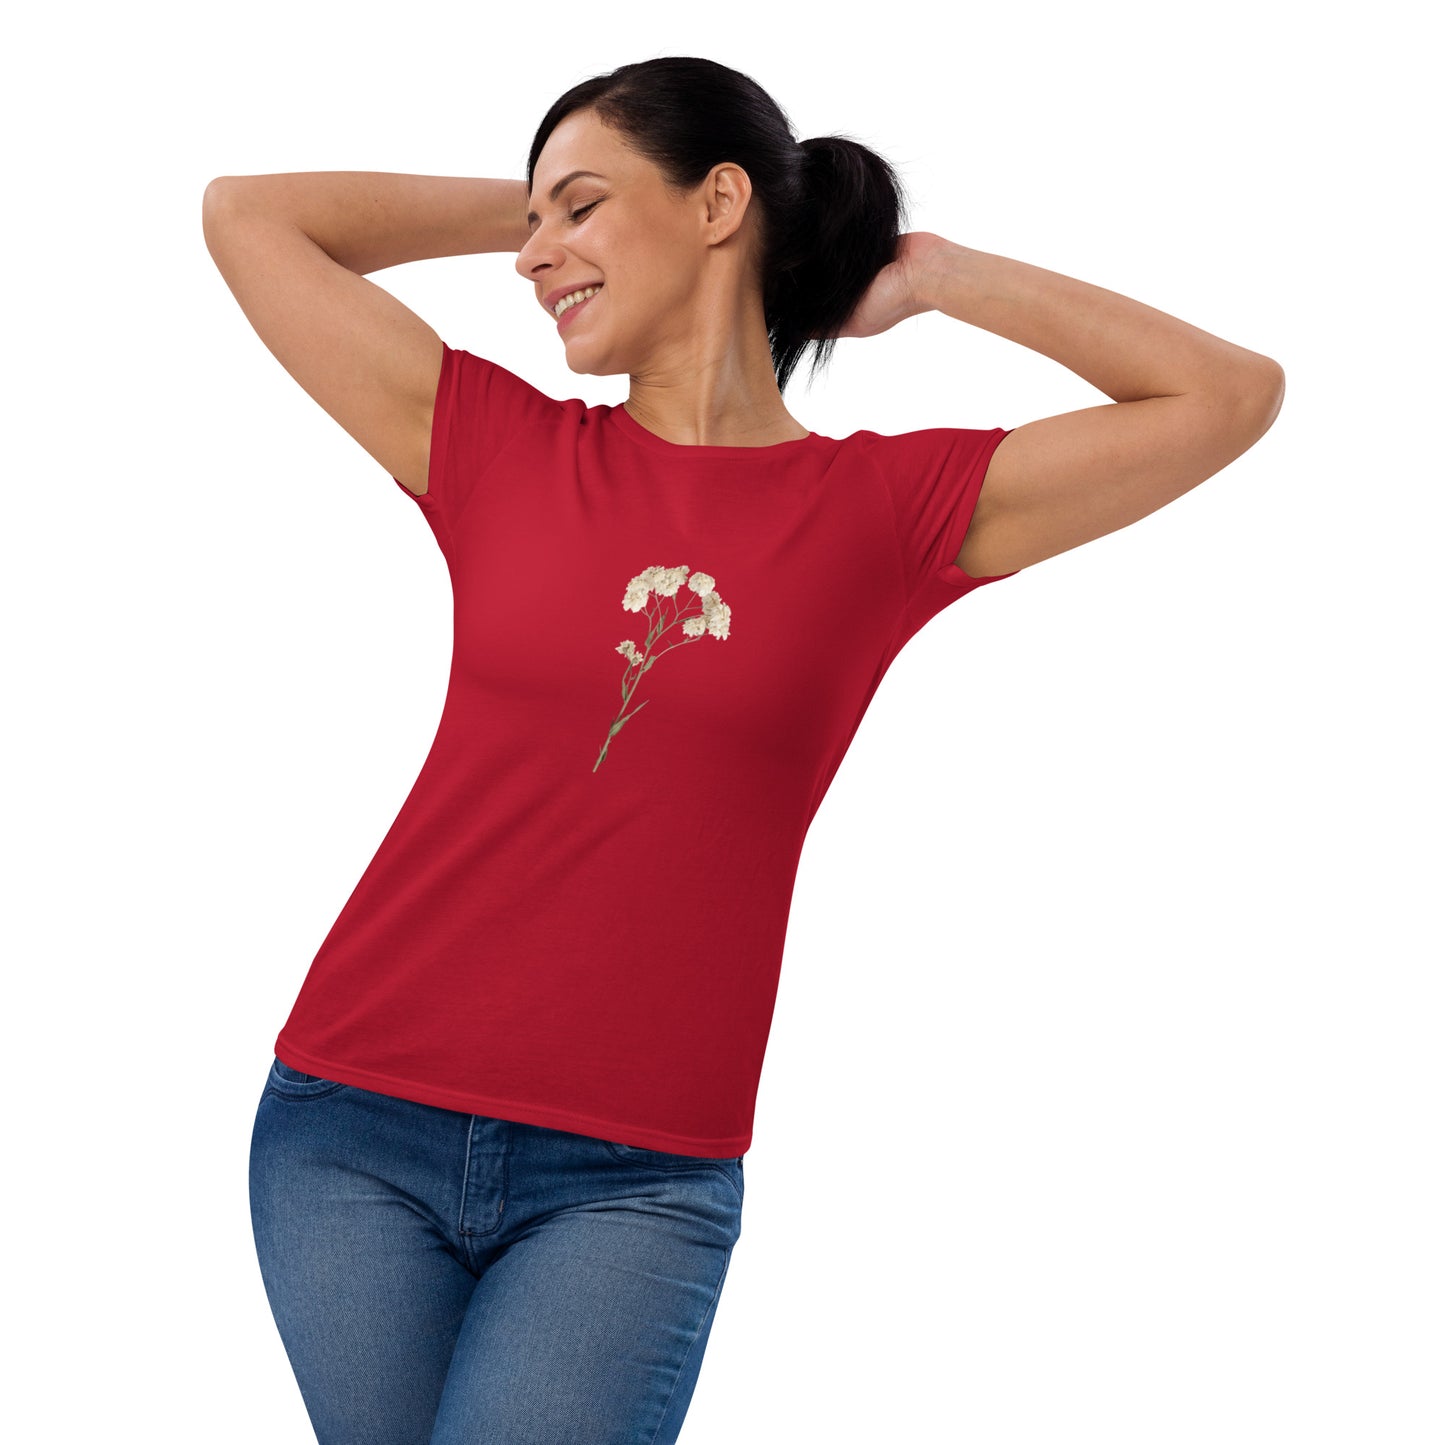 Elegant Floral Short Sleeve T-Shirt for Women | Premium Cotton and Cotton-Polyester Blend